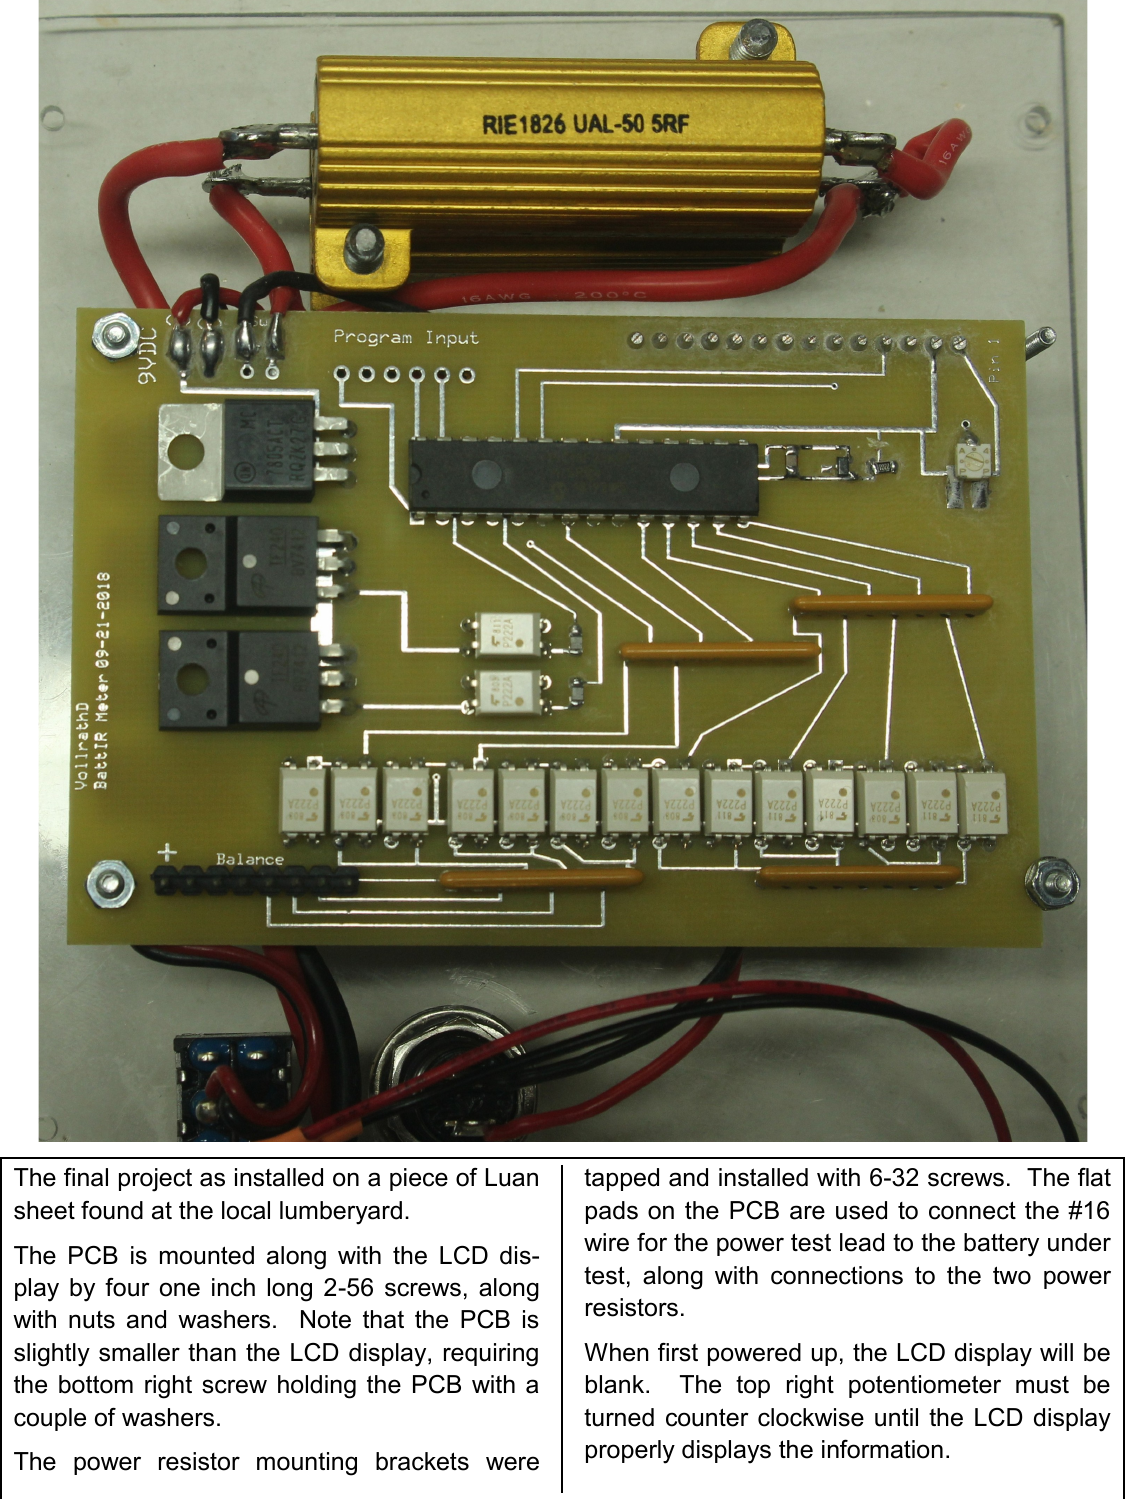 Page 5 of 6 - Batt IR Meter Assembly Instructions